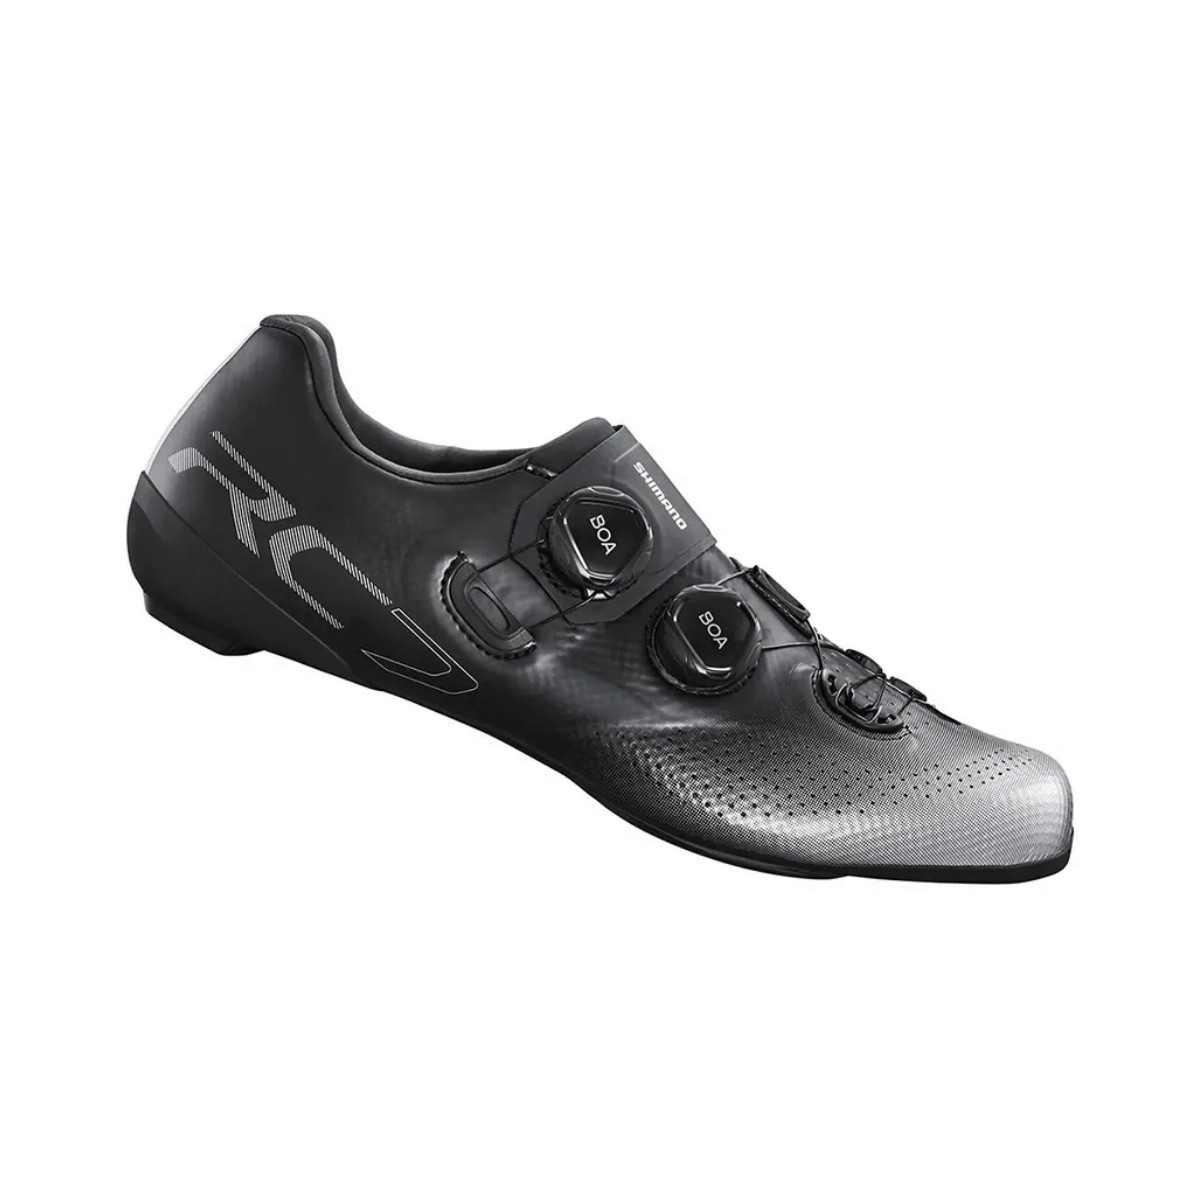 Shimano RC702 Shoes Black, Size 42 - EUR